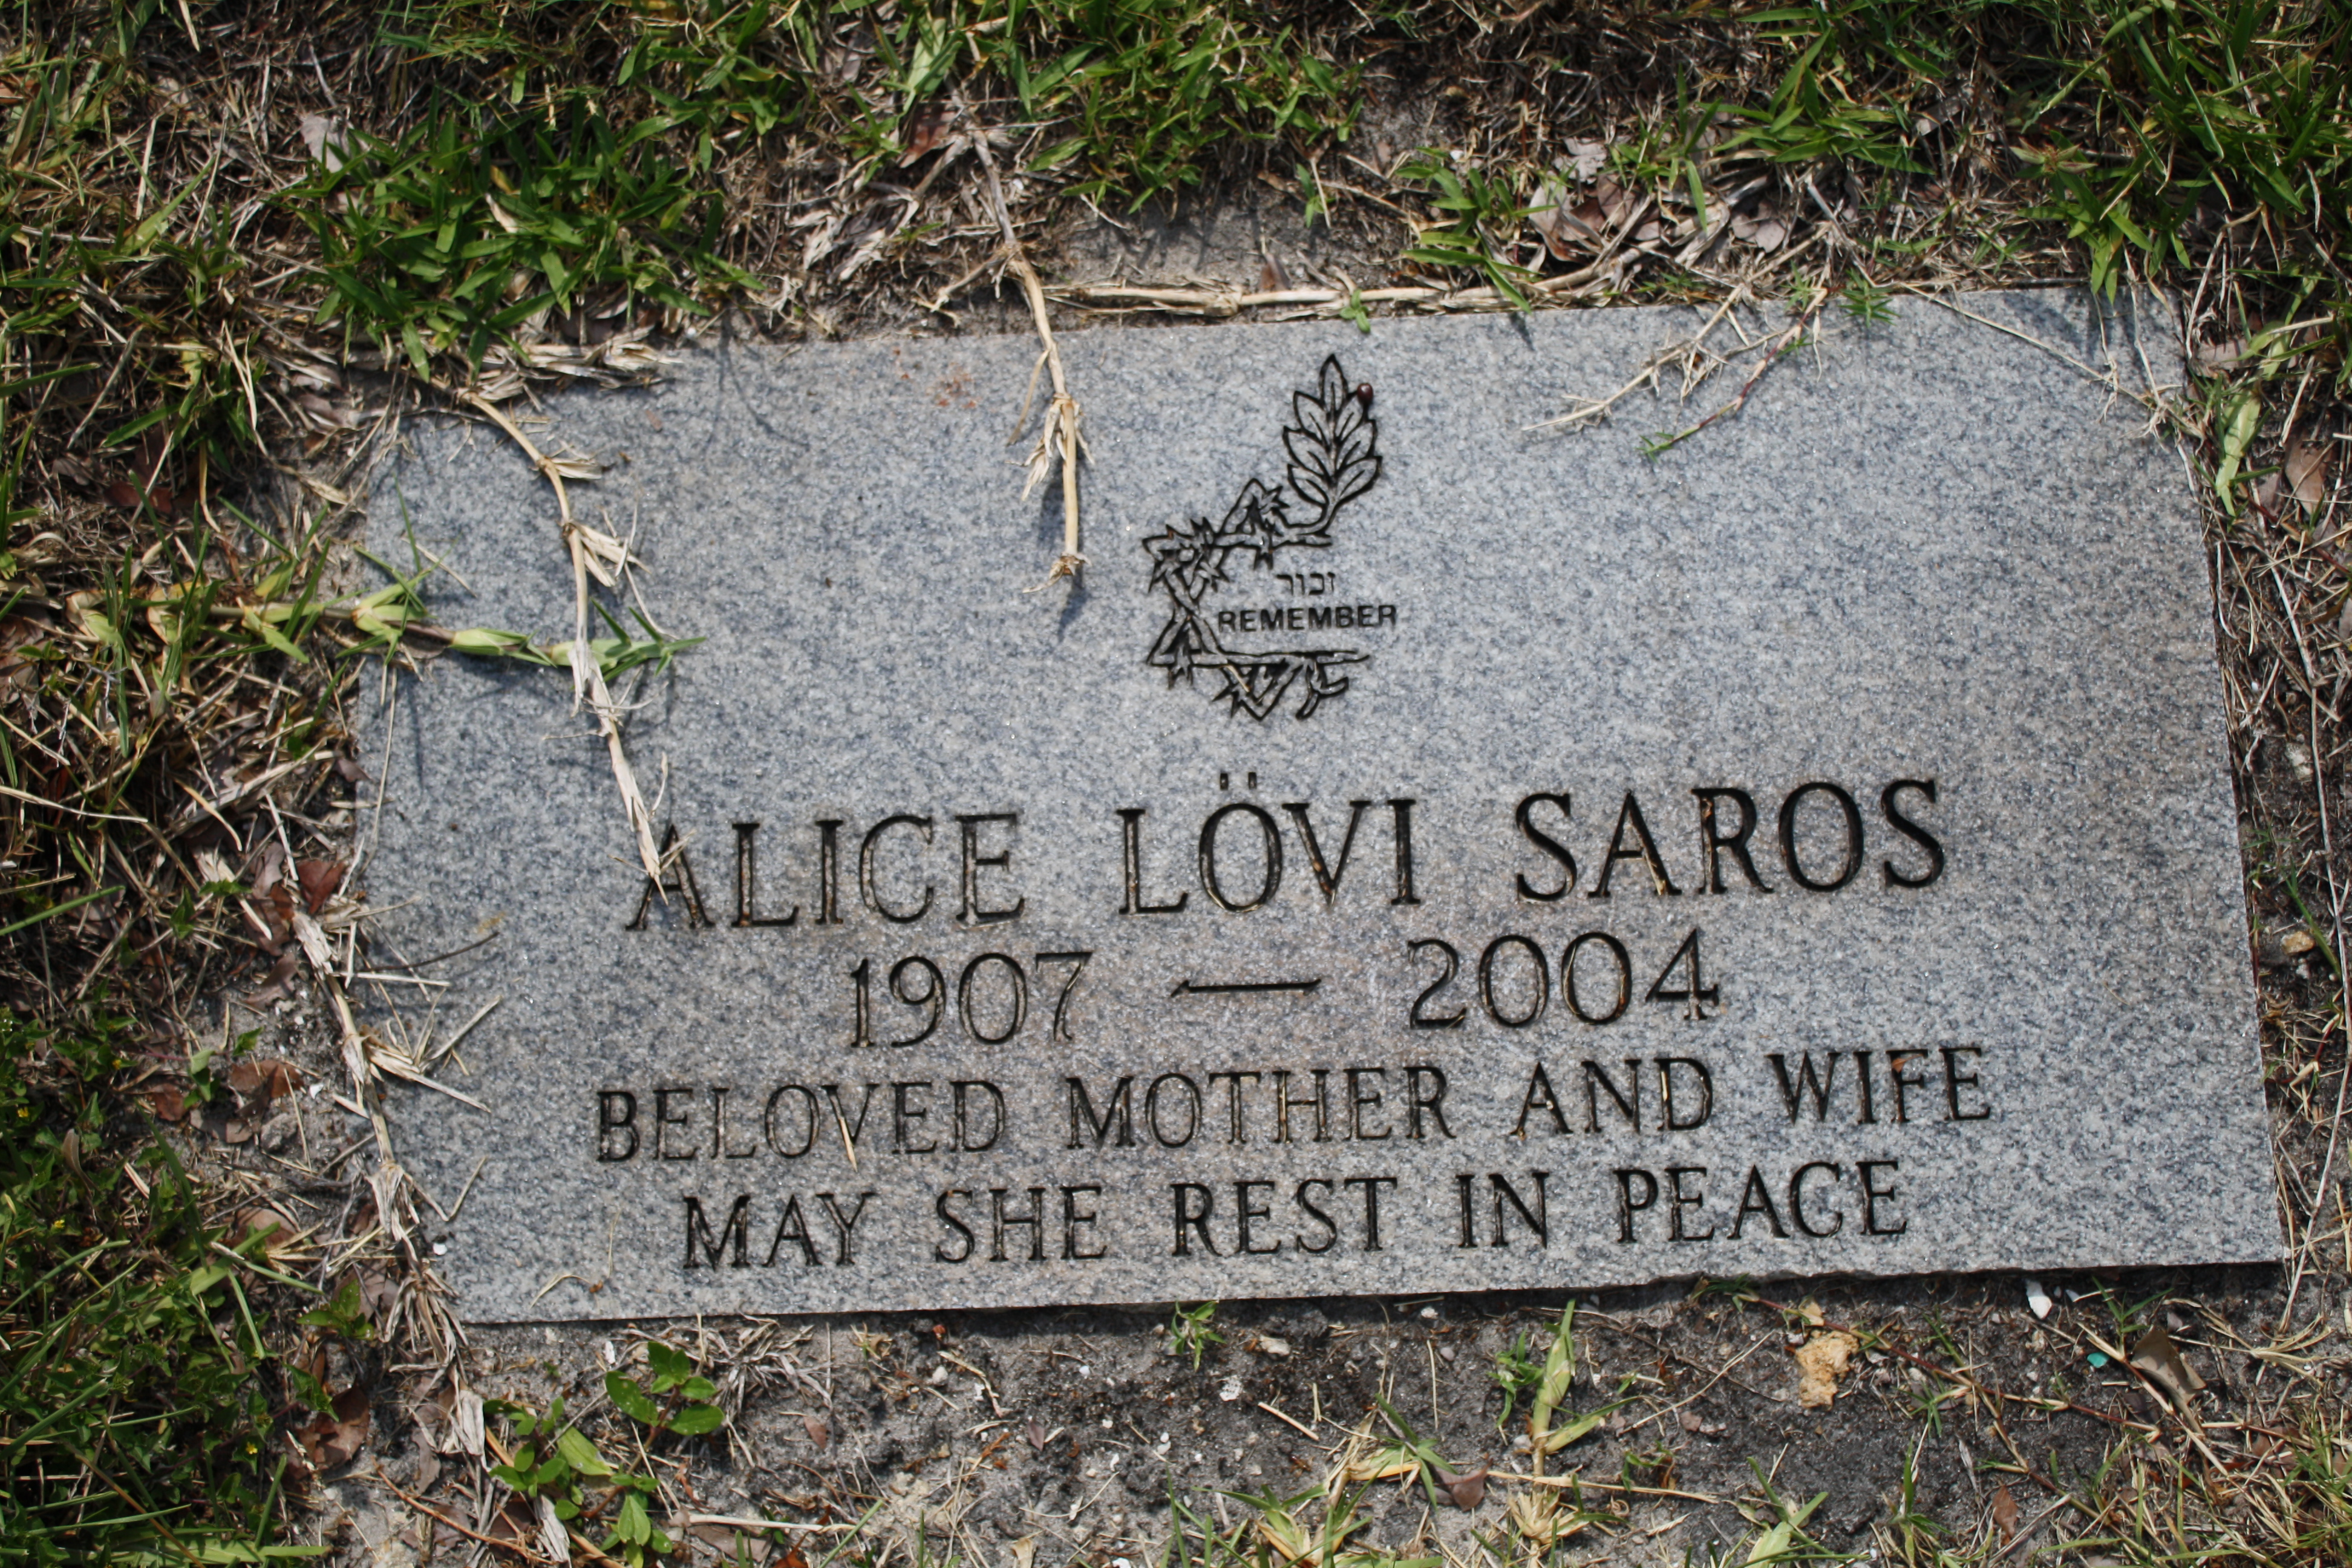 Alice Lovi Saros